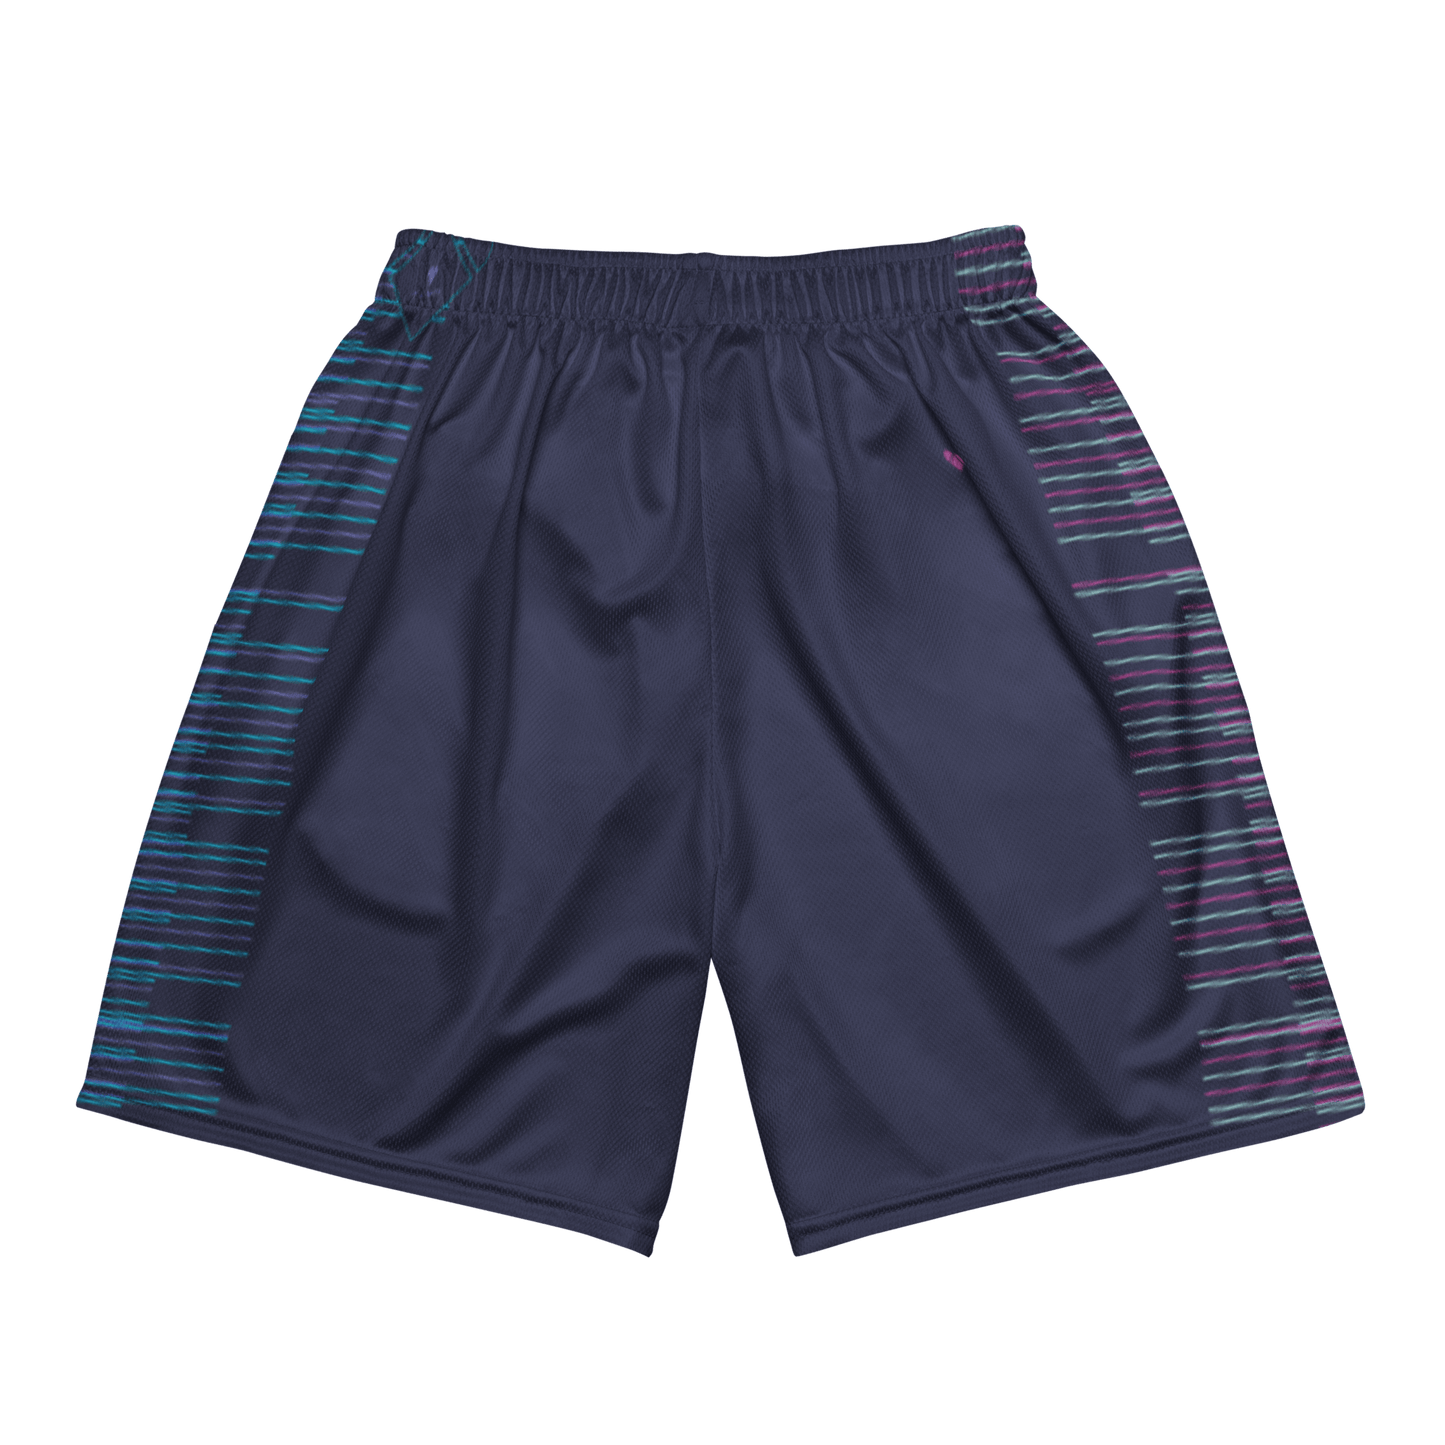 Vibrant gradient stripes adorn CRiZ AMOR's Dark Slate Blue Mesh Shorts